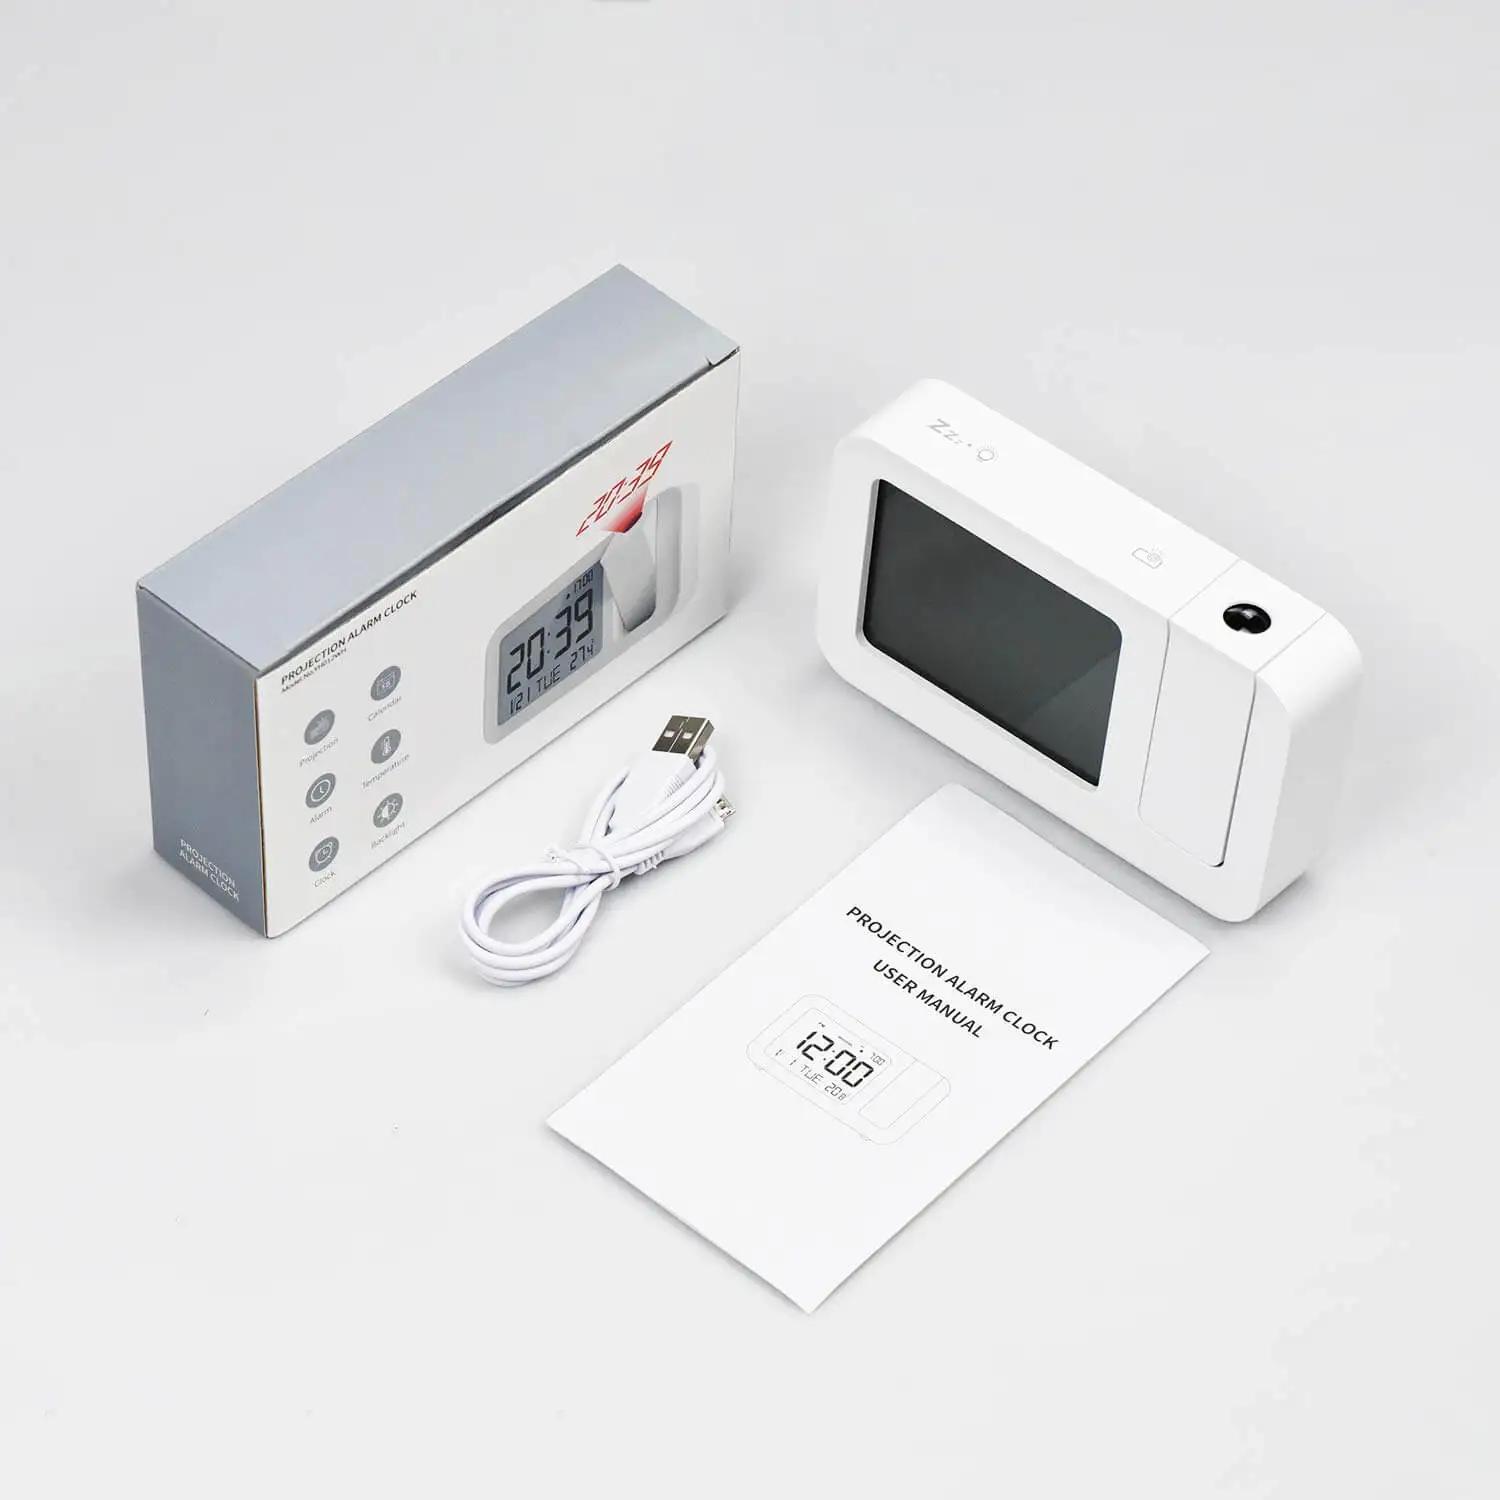 
Electronic LCD Projector Alarm Clock Time Temperature Digital Display Desk Table Bedside Clocks 